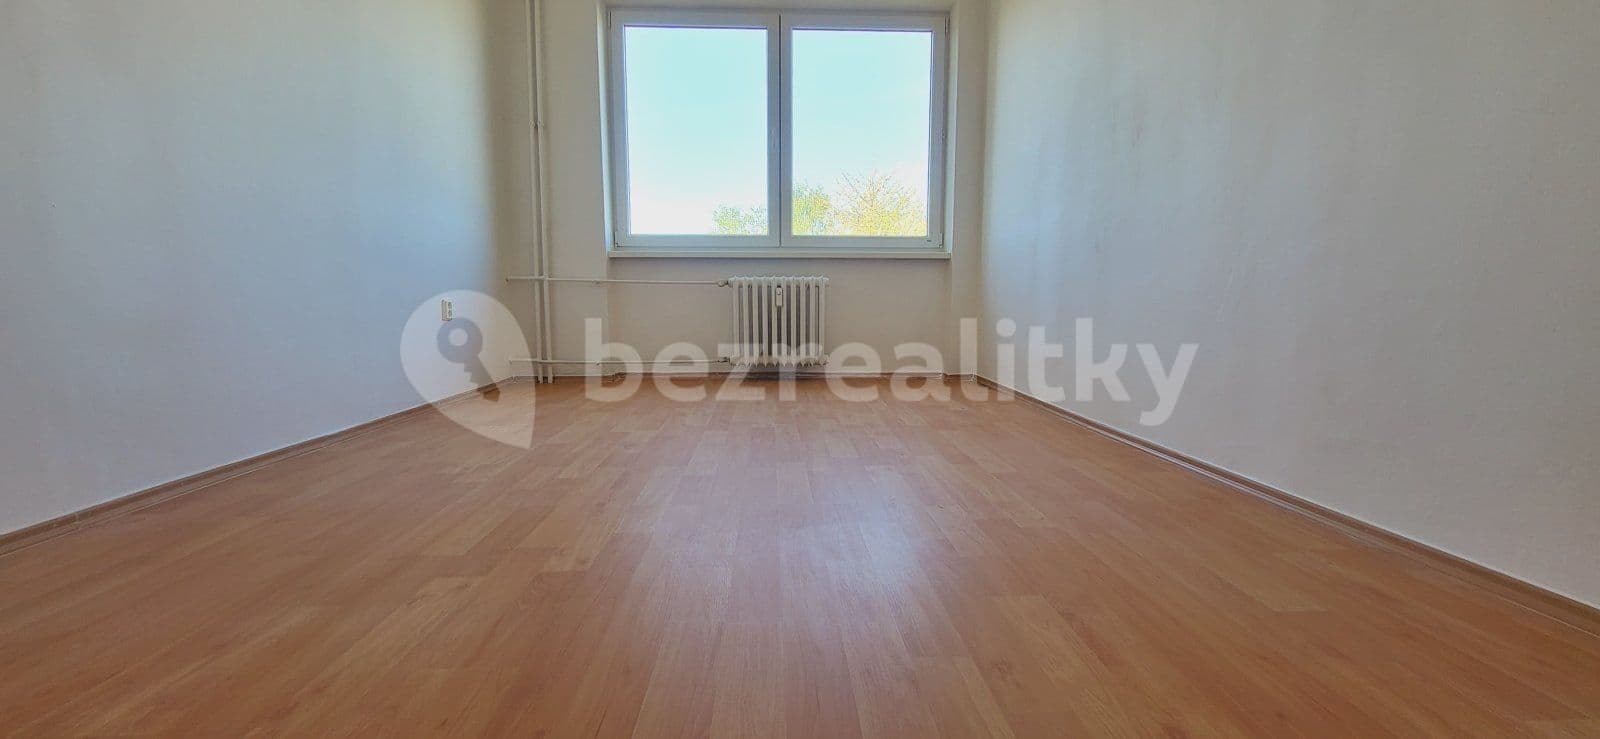 Prenájom bytu 2-izbový 48 m², Na Nábřeží, Havířov, Moravskoslezský kraj